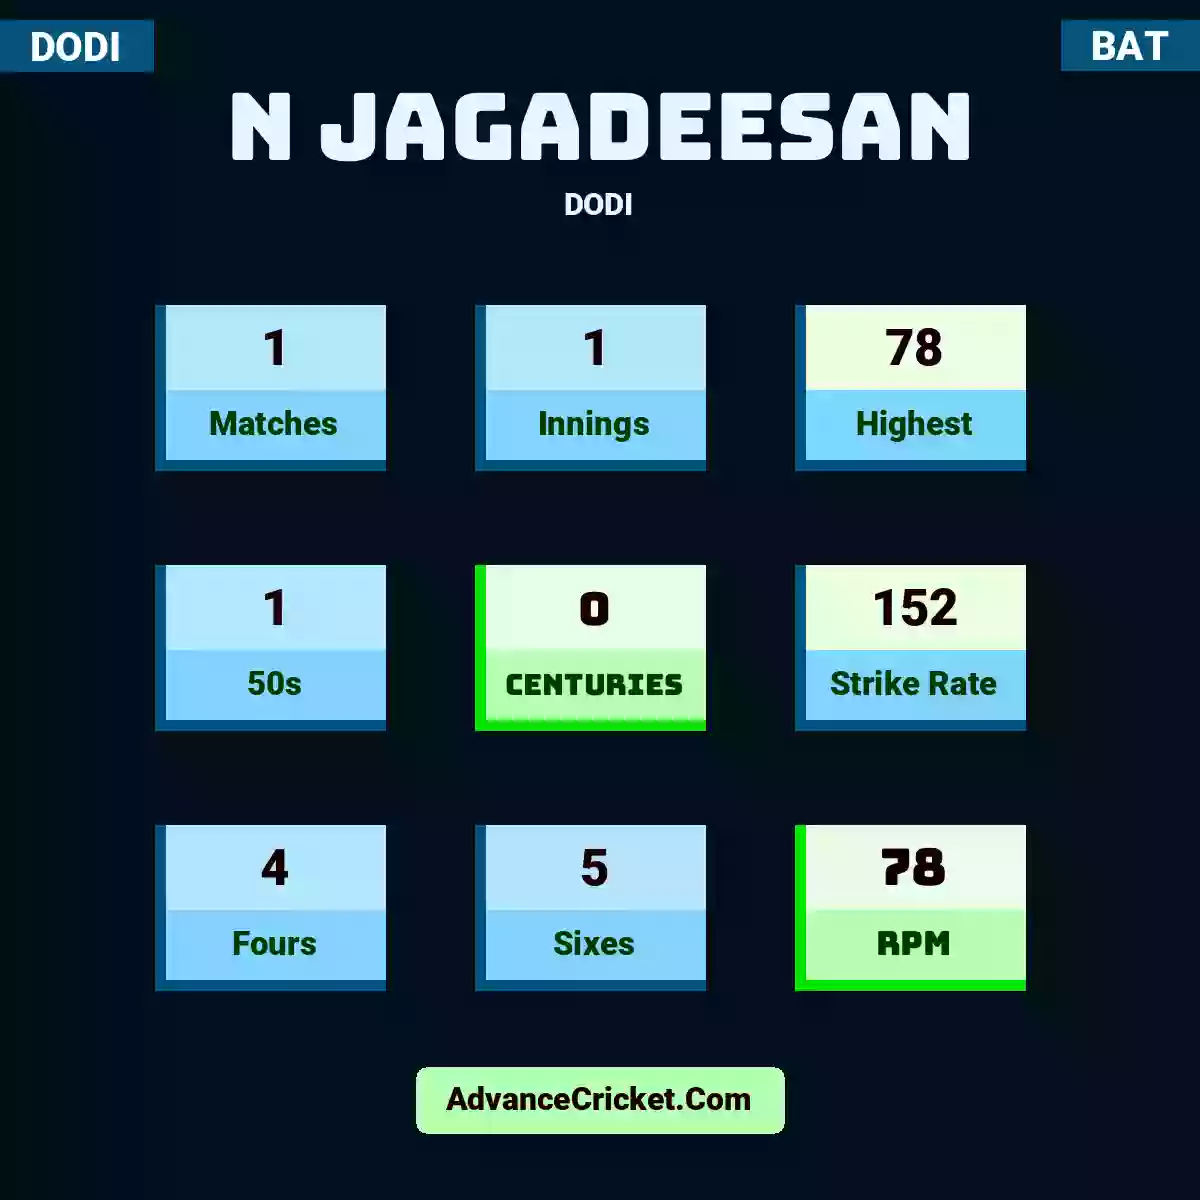 N Jagadeesan DODI , N Jagadeesan played 1 matches, scored 78 runs as highest, 1 half-centuries, and 0 centuries, with a strike rate of 152. N.Jagadeesan hit 4 fours and 5 sixes, with an RPM of 78.